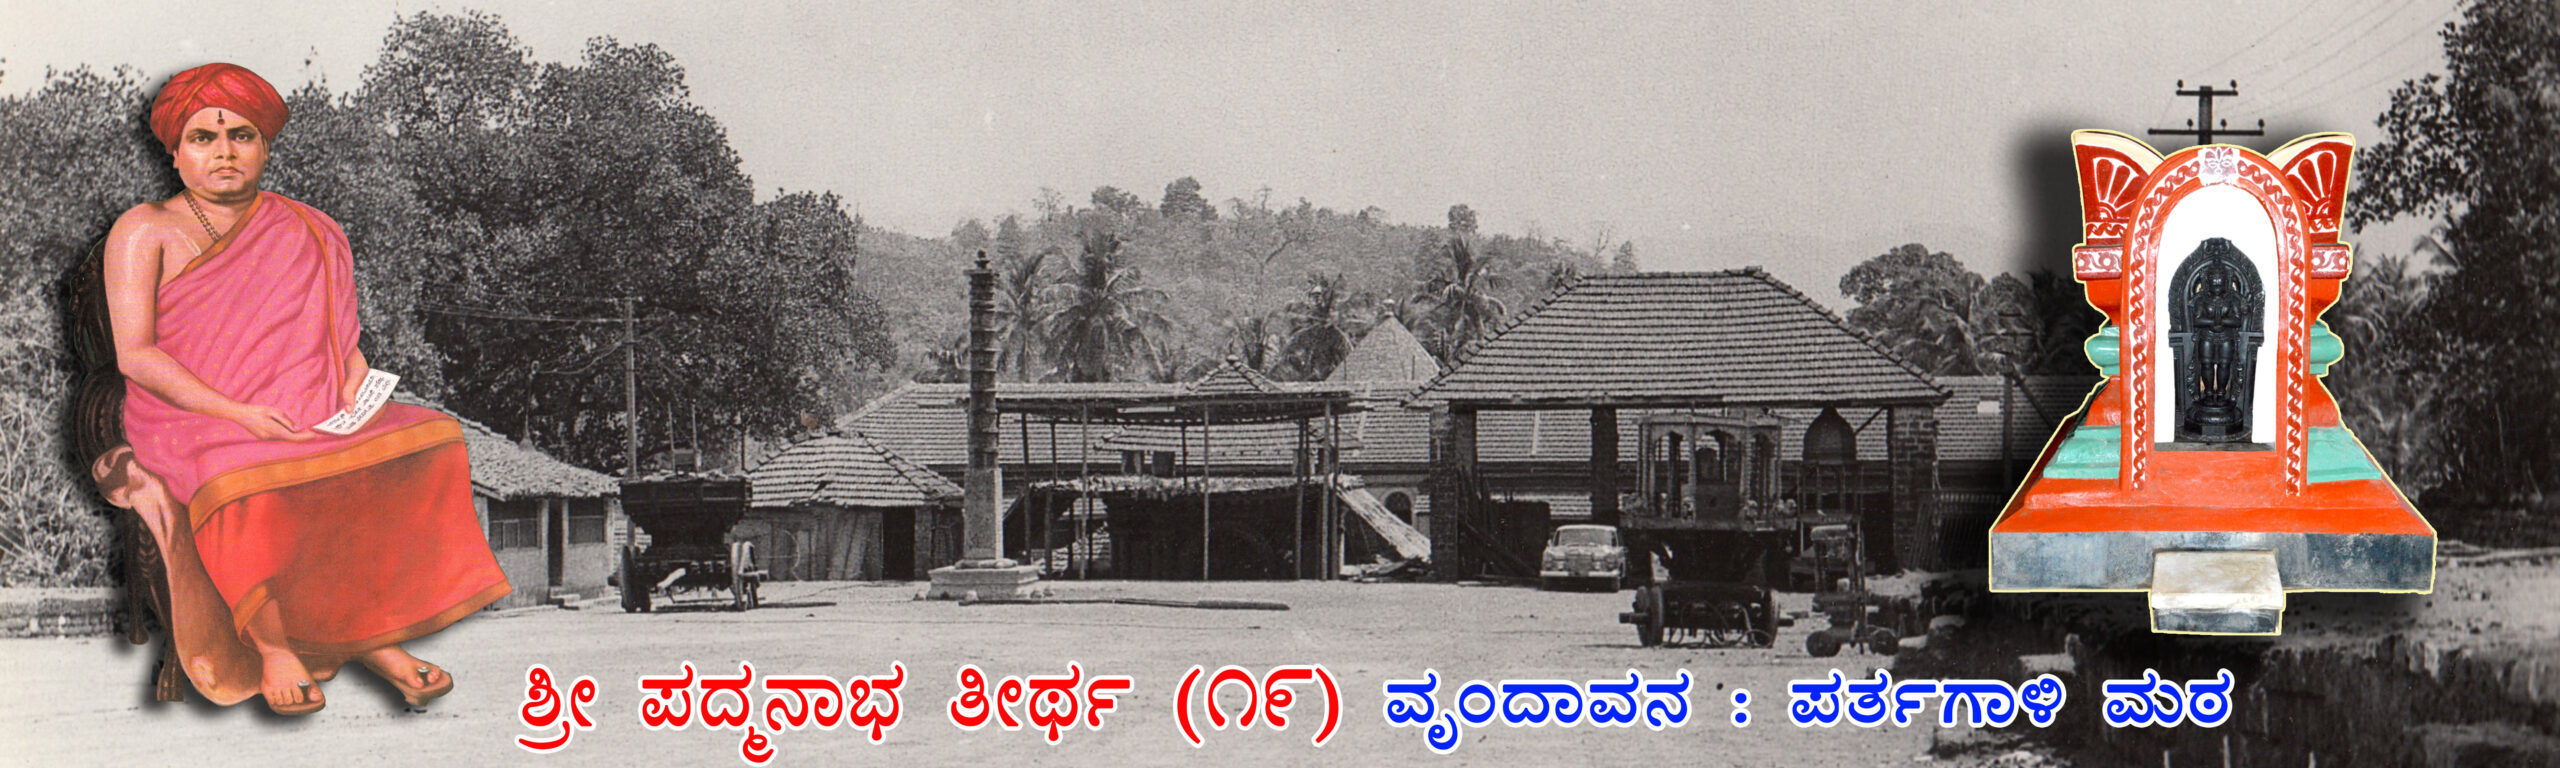 19 Padmanabha Kannada